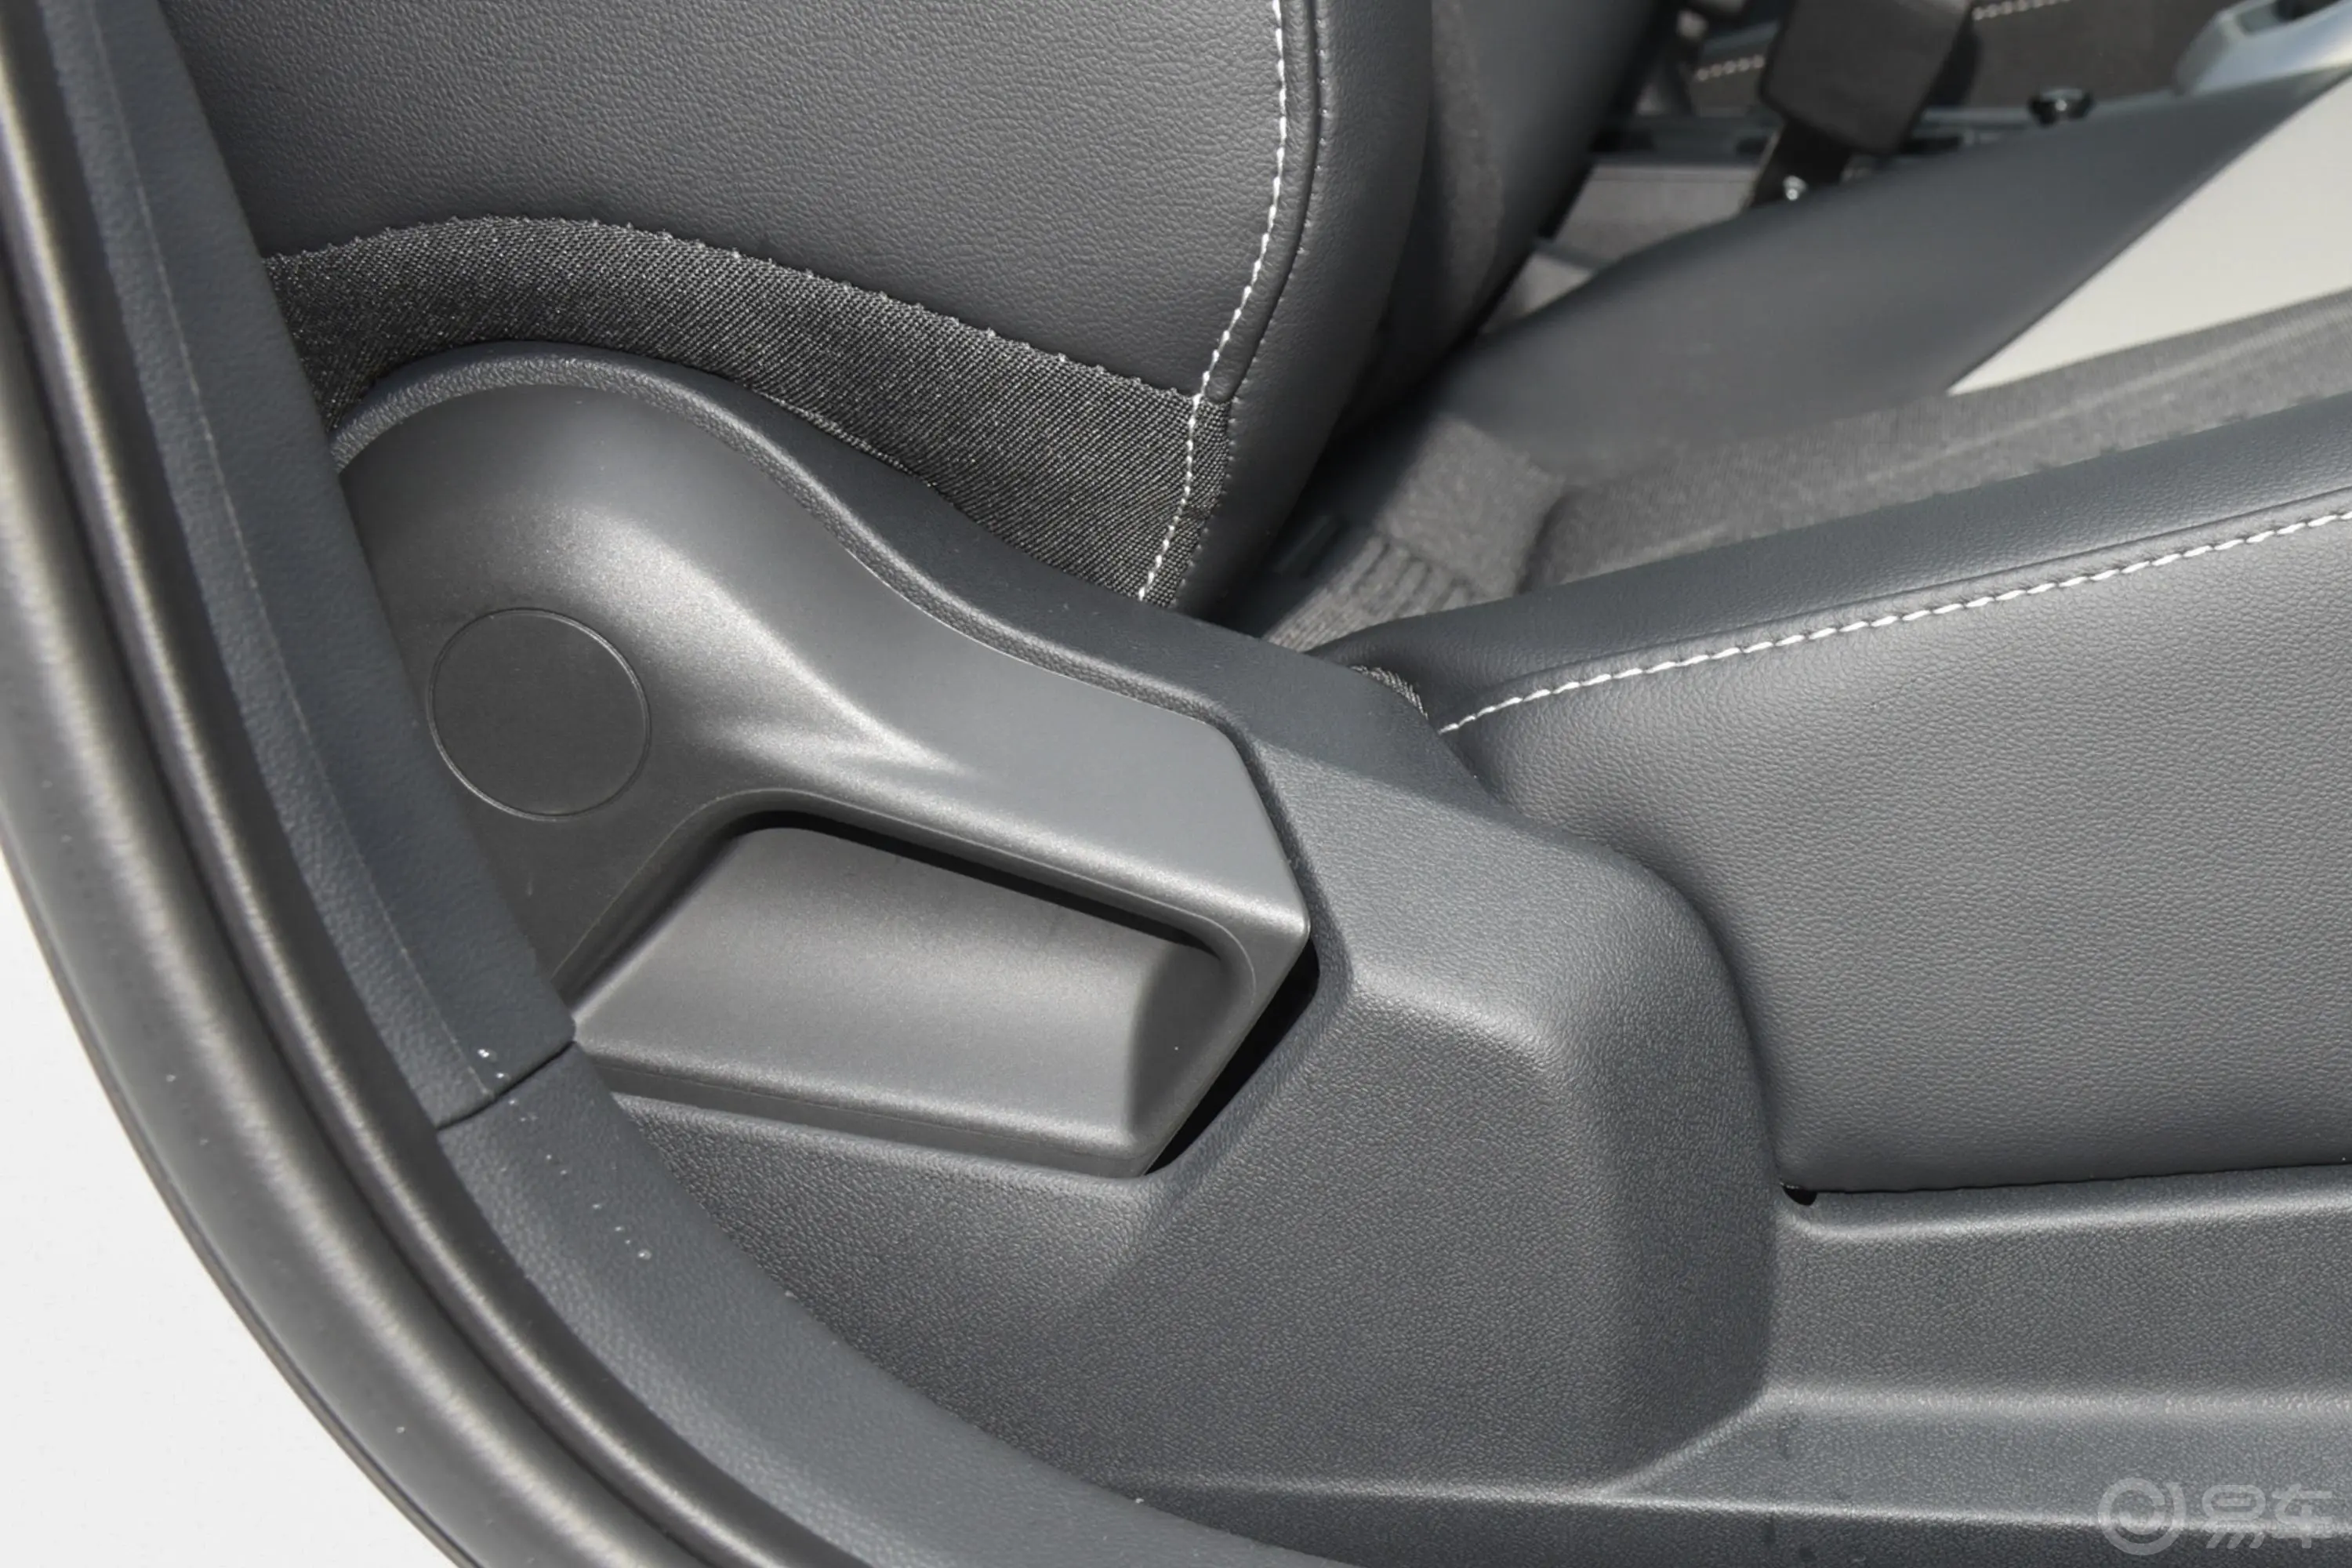 PoloPlus 1.5L 自动炫彩科技版副驾座椅调节